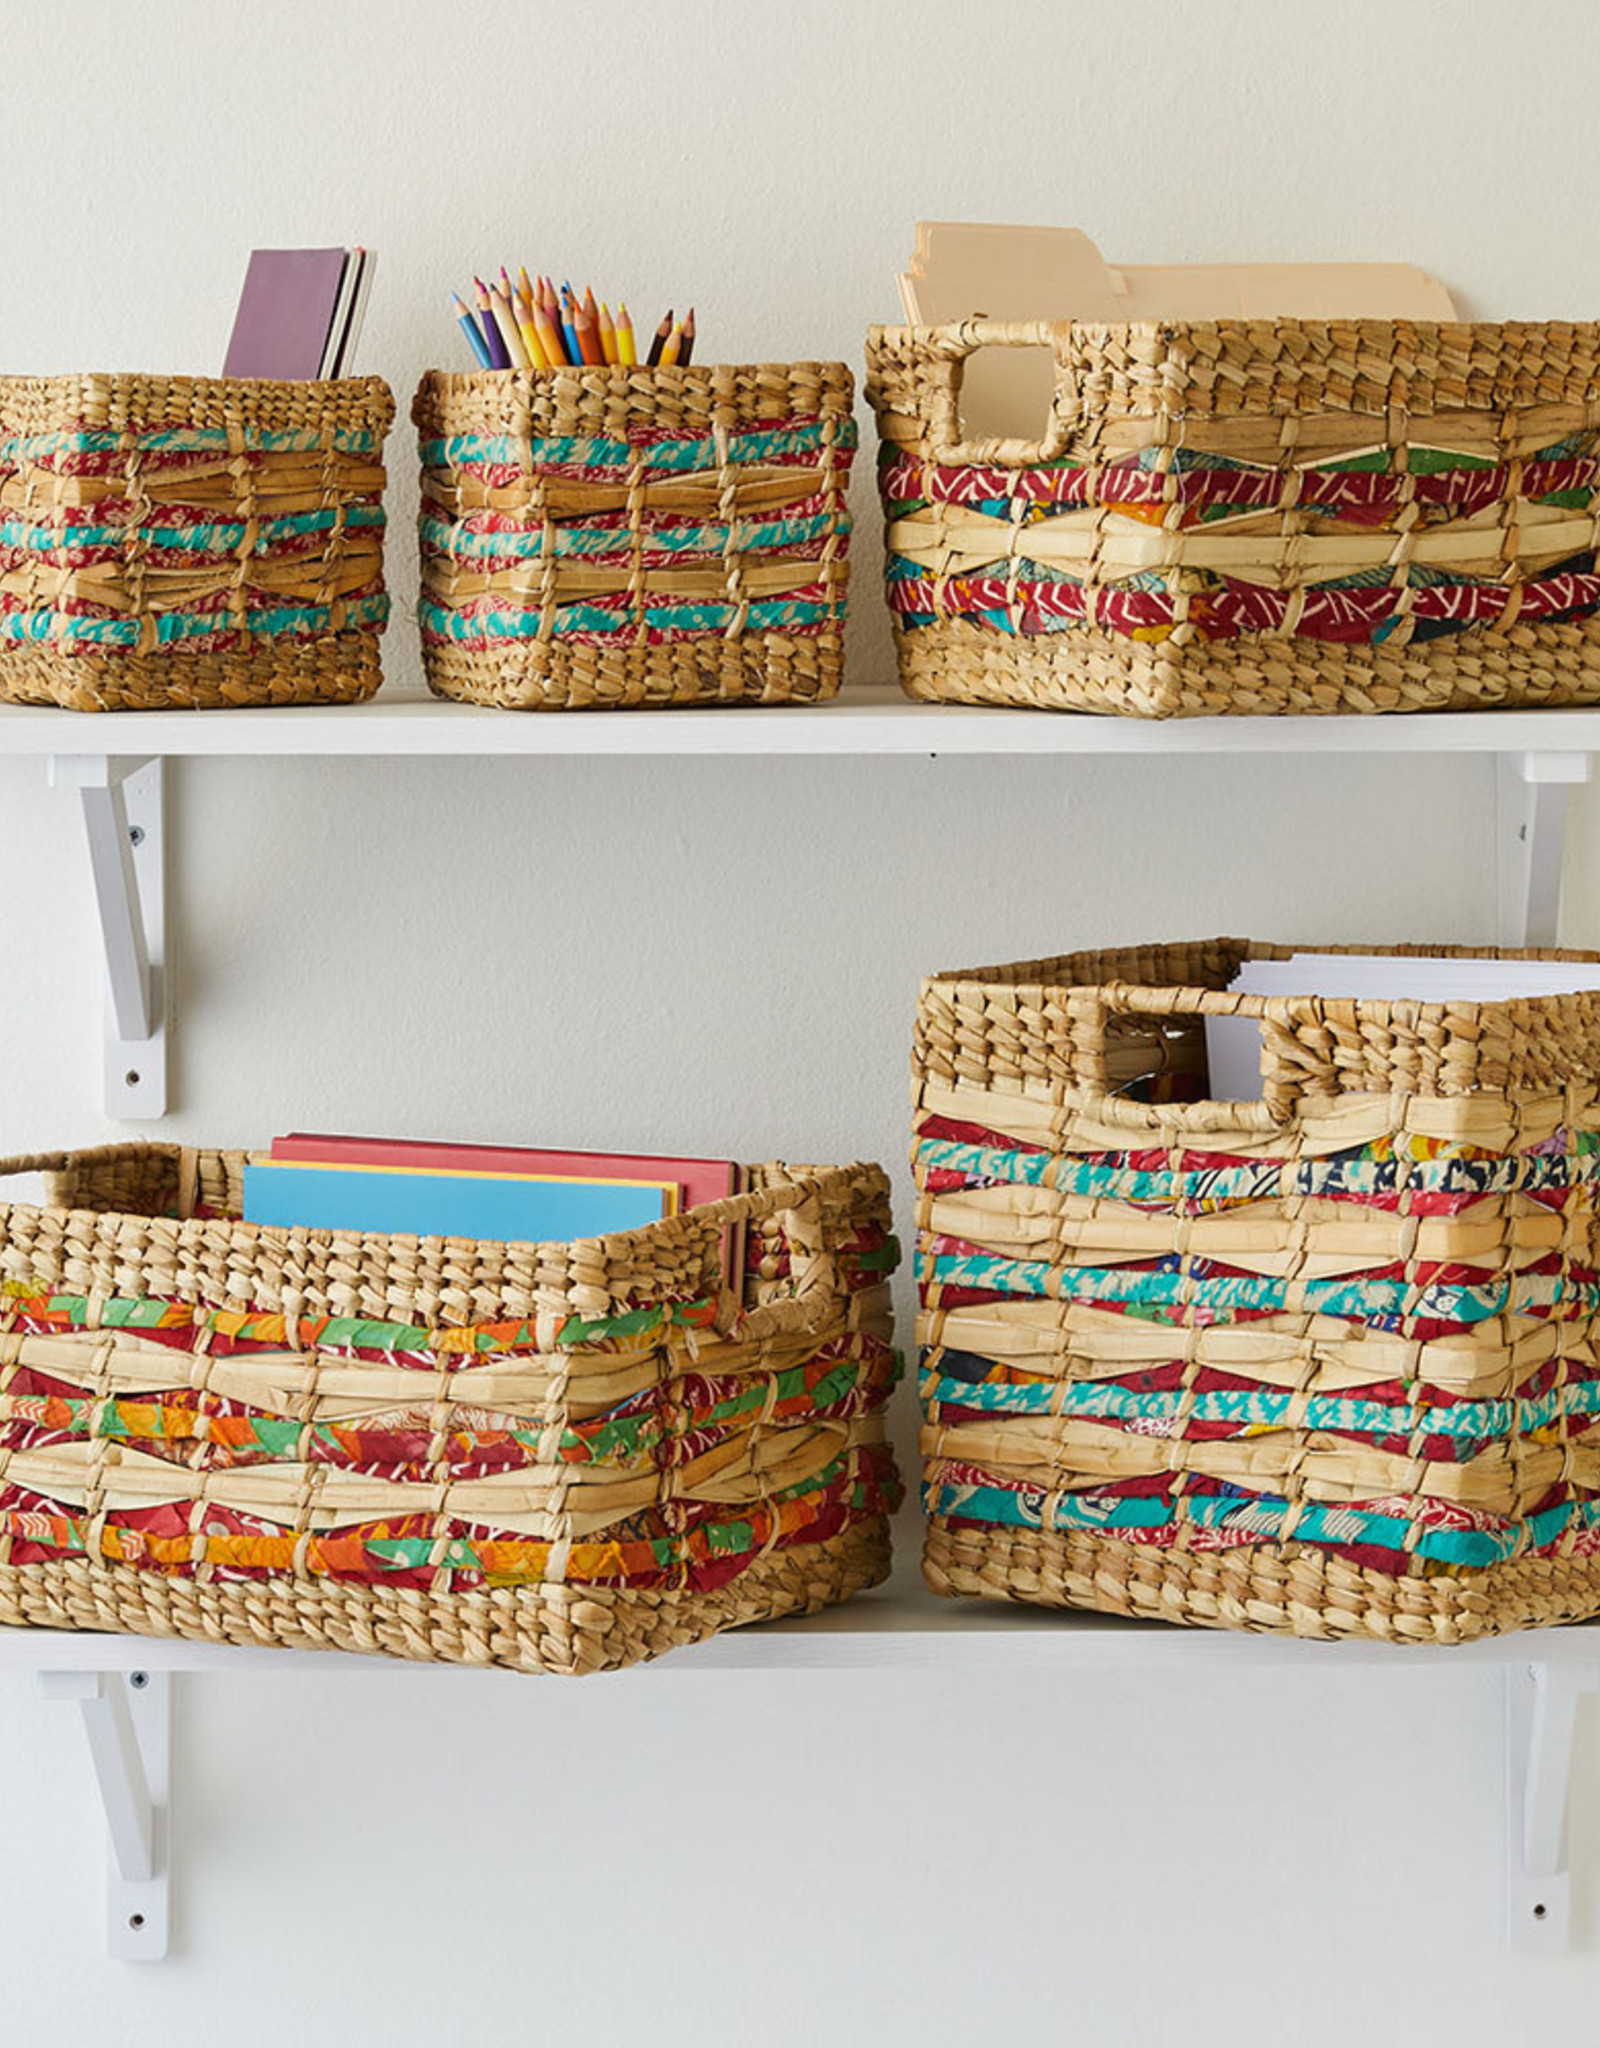 Serrv Katra Sari Nesting Storage Baskets - Small